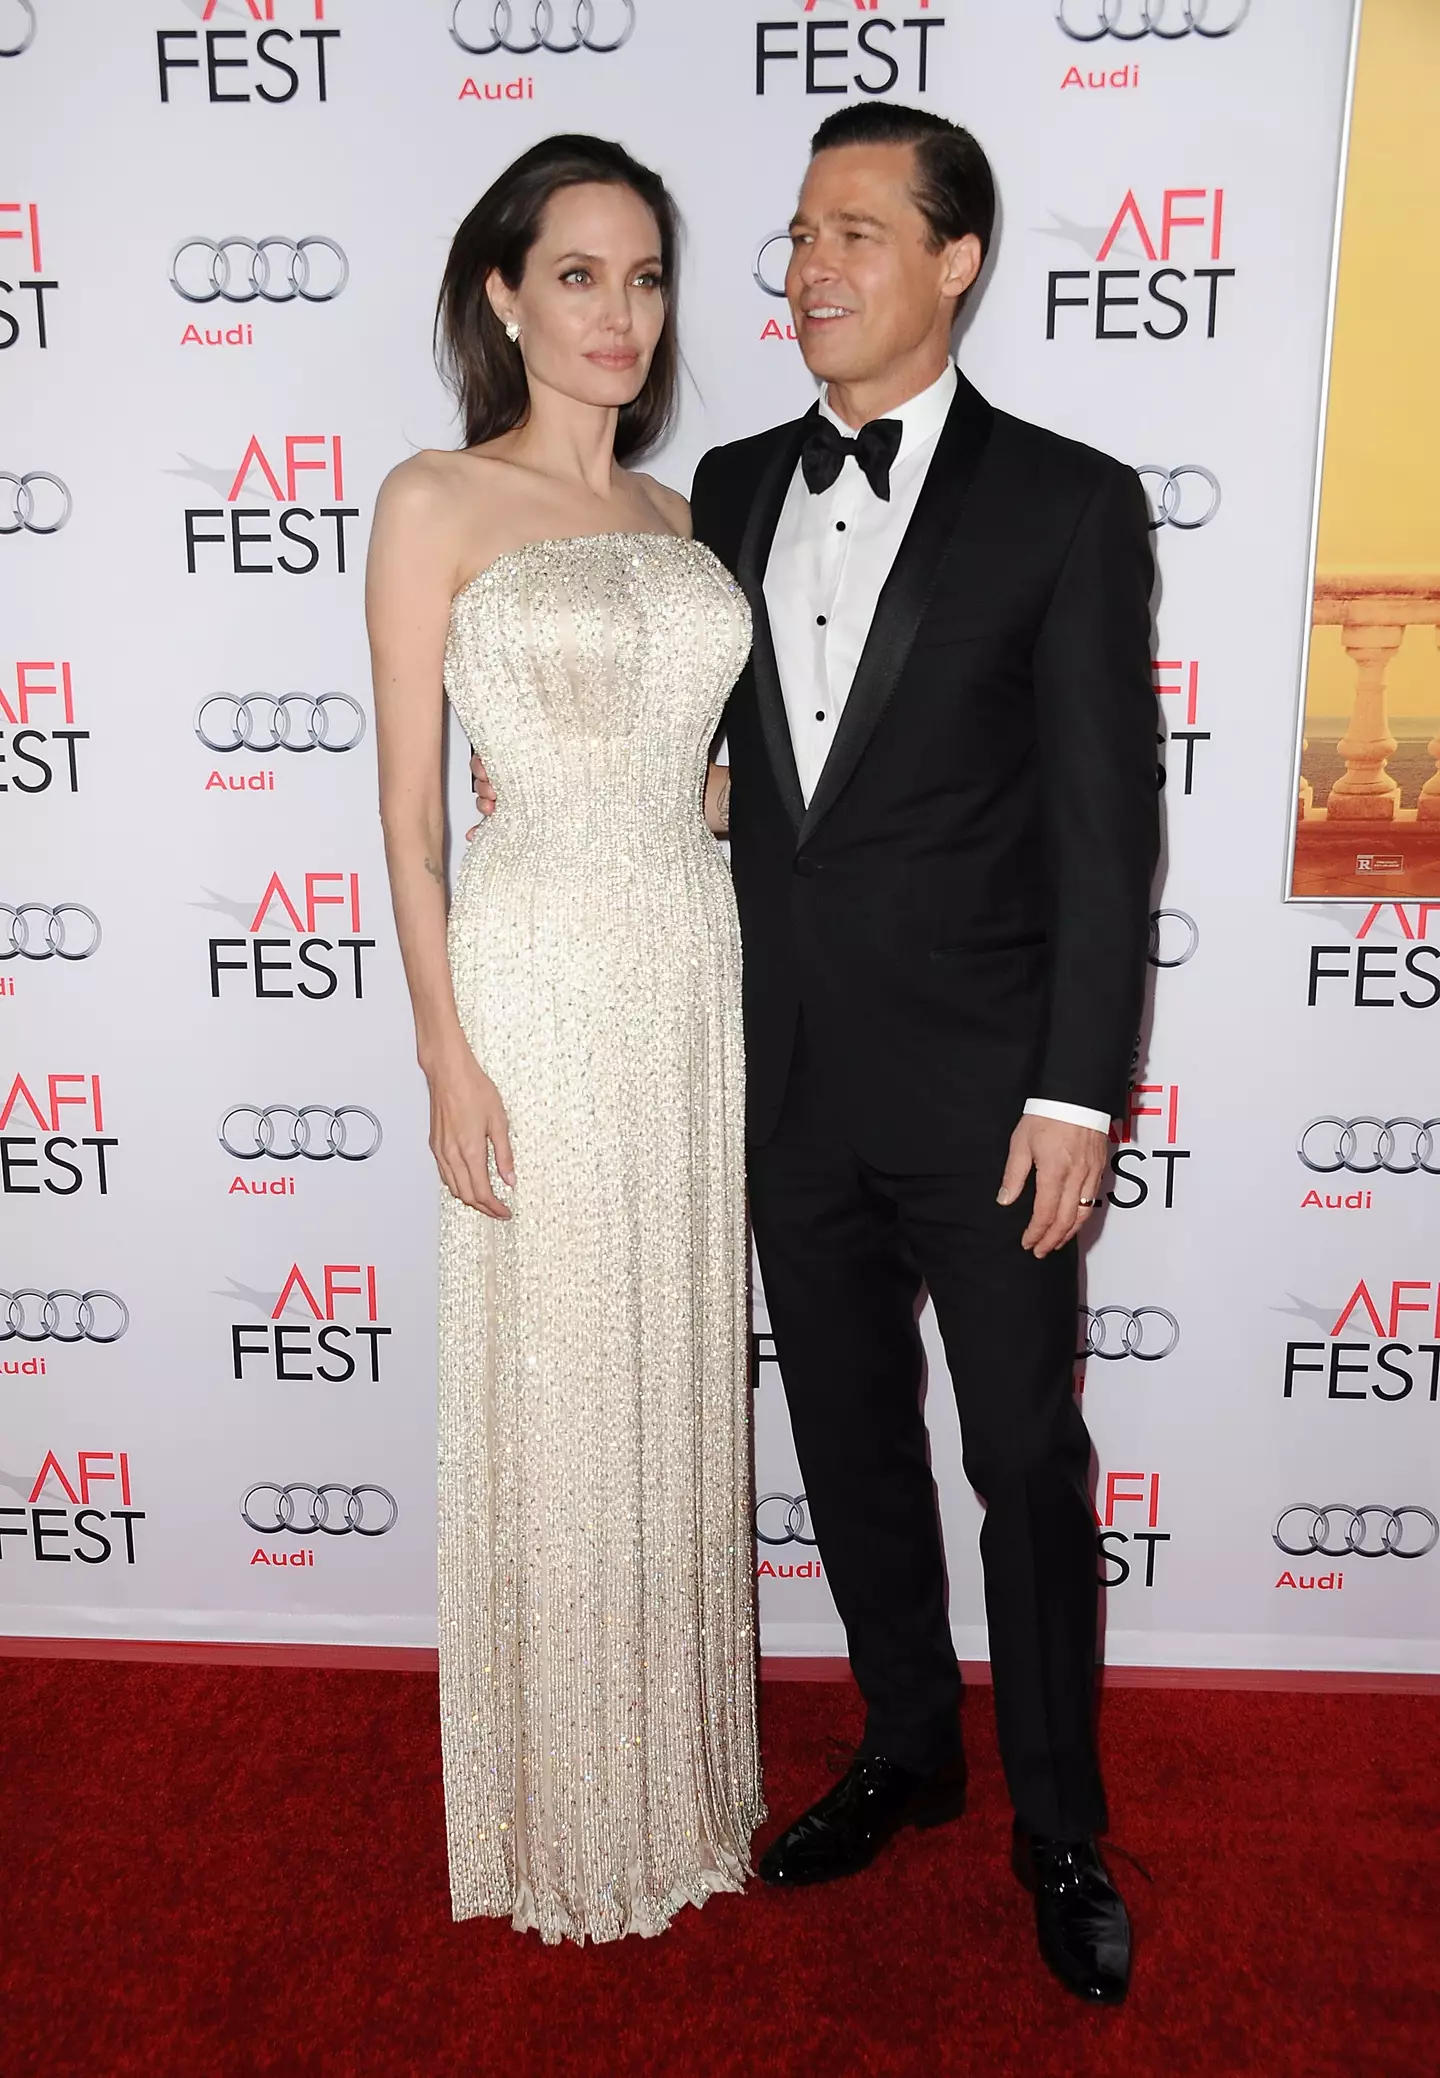 Brad Pitt and Angelina Jolie divorced in 2016.